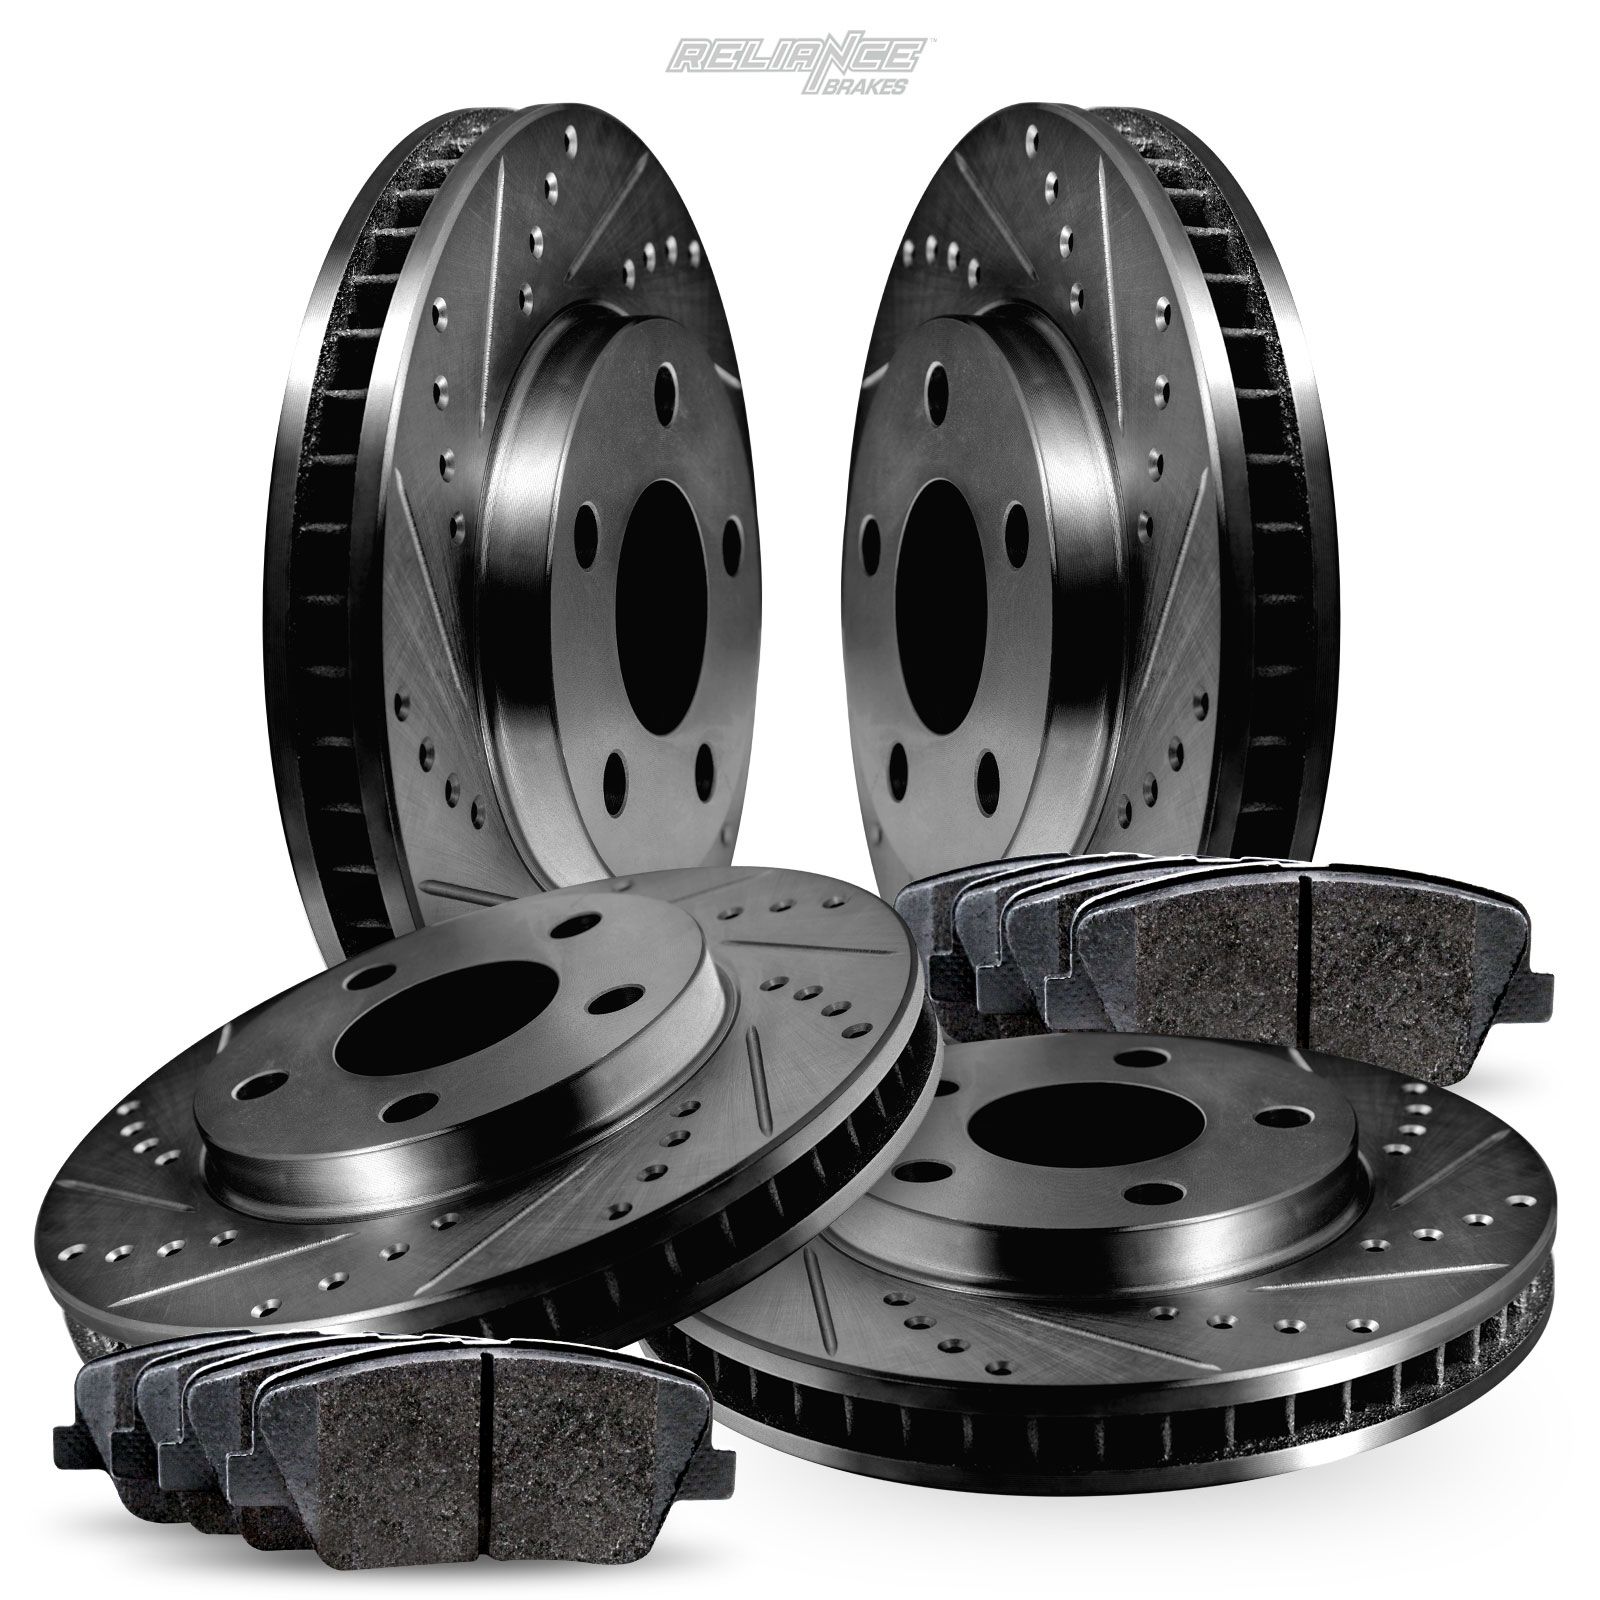 Ceramic Brake pads BBCC.67127.02 PowerSport Black Front/Rear Drill Slot Rotors 